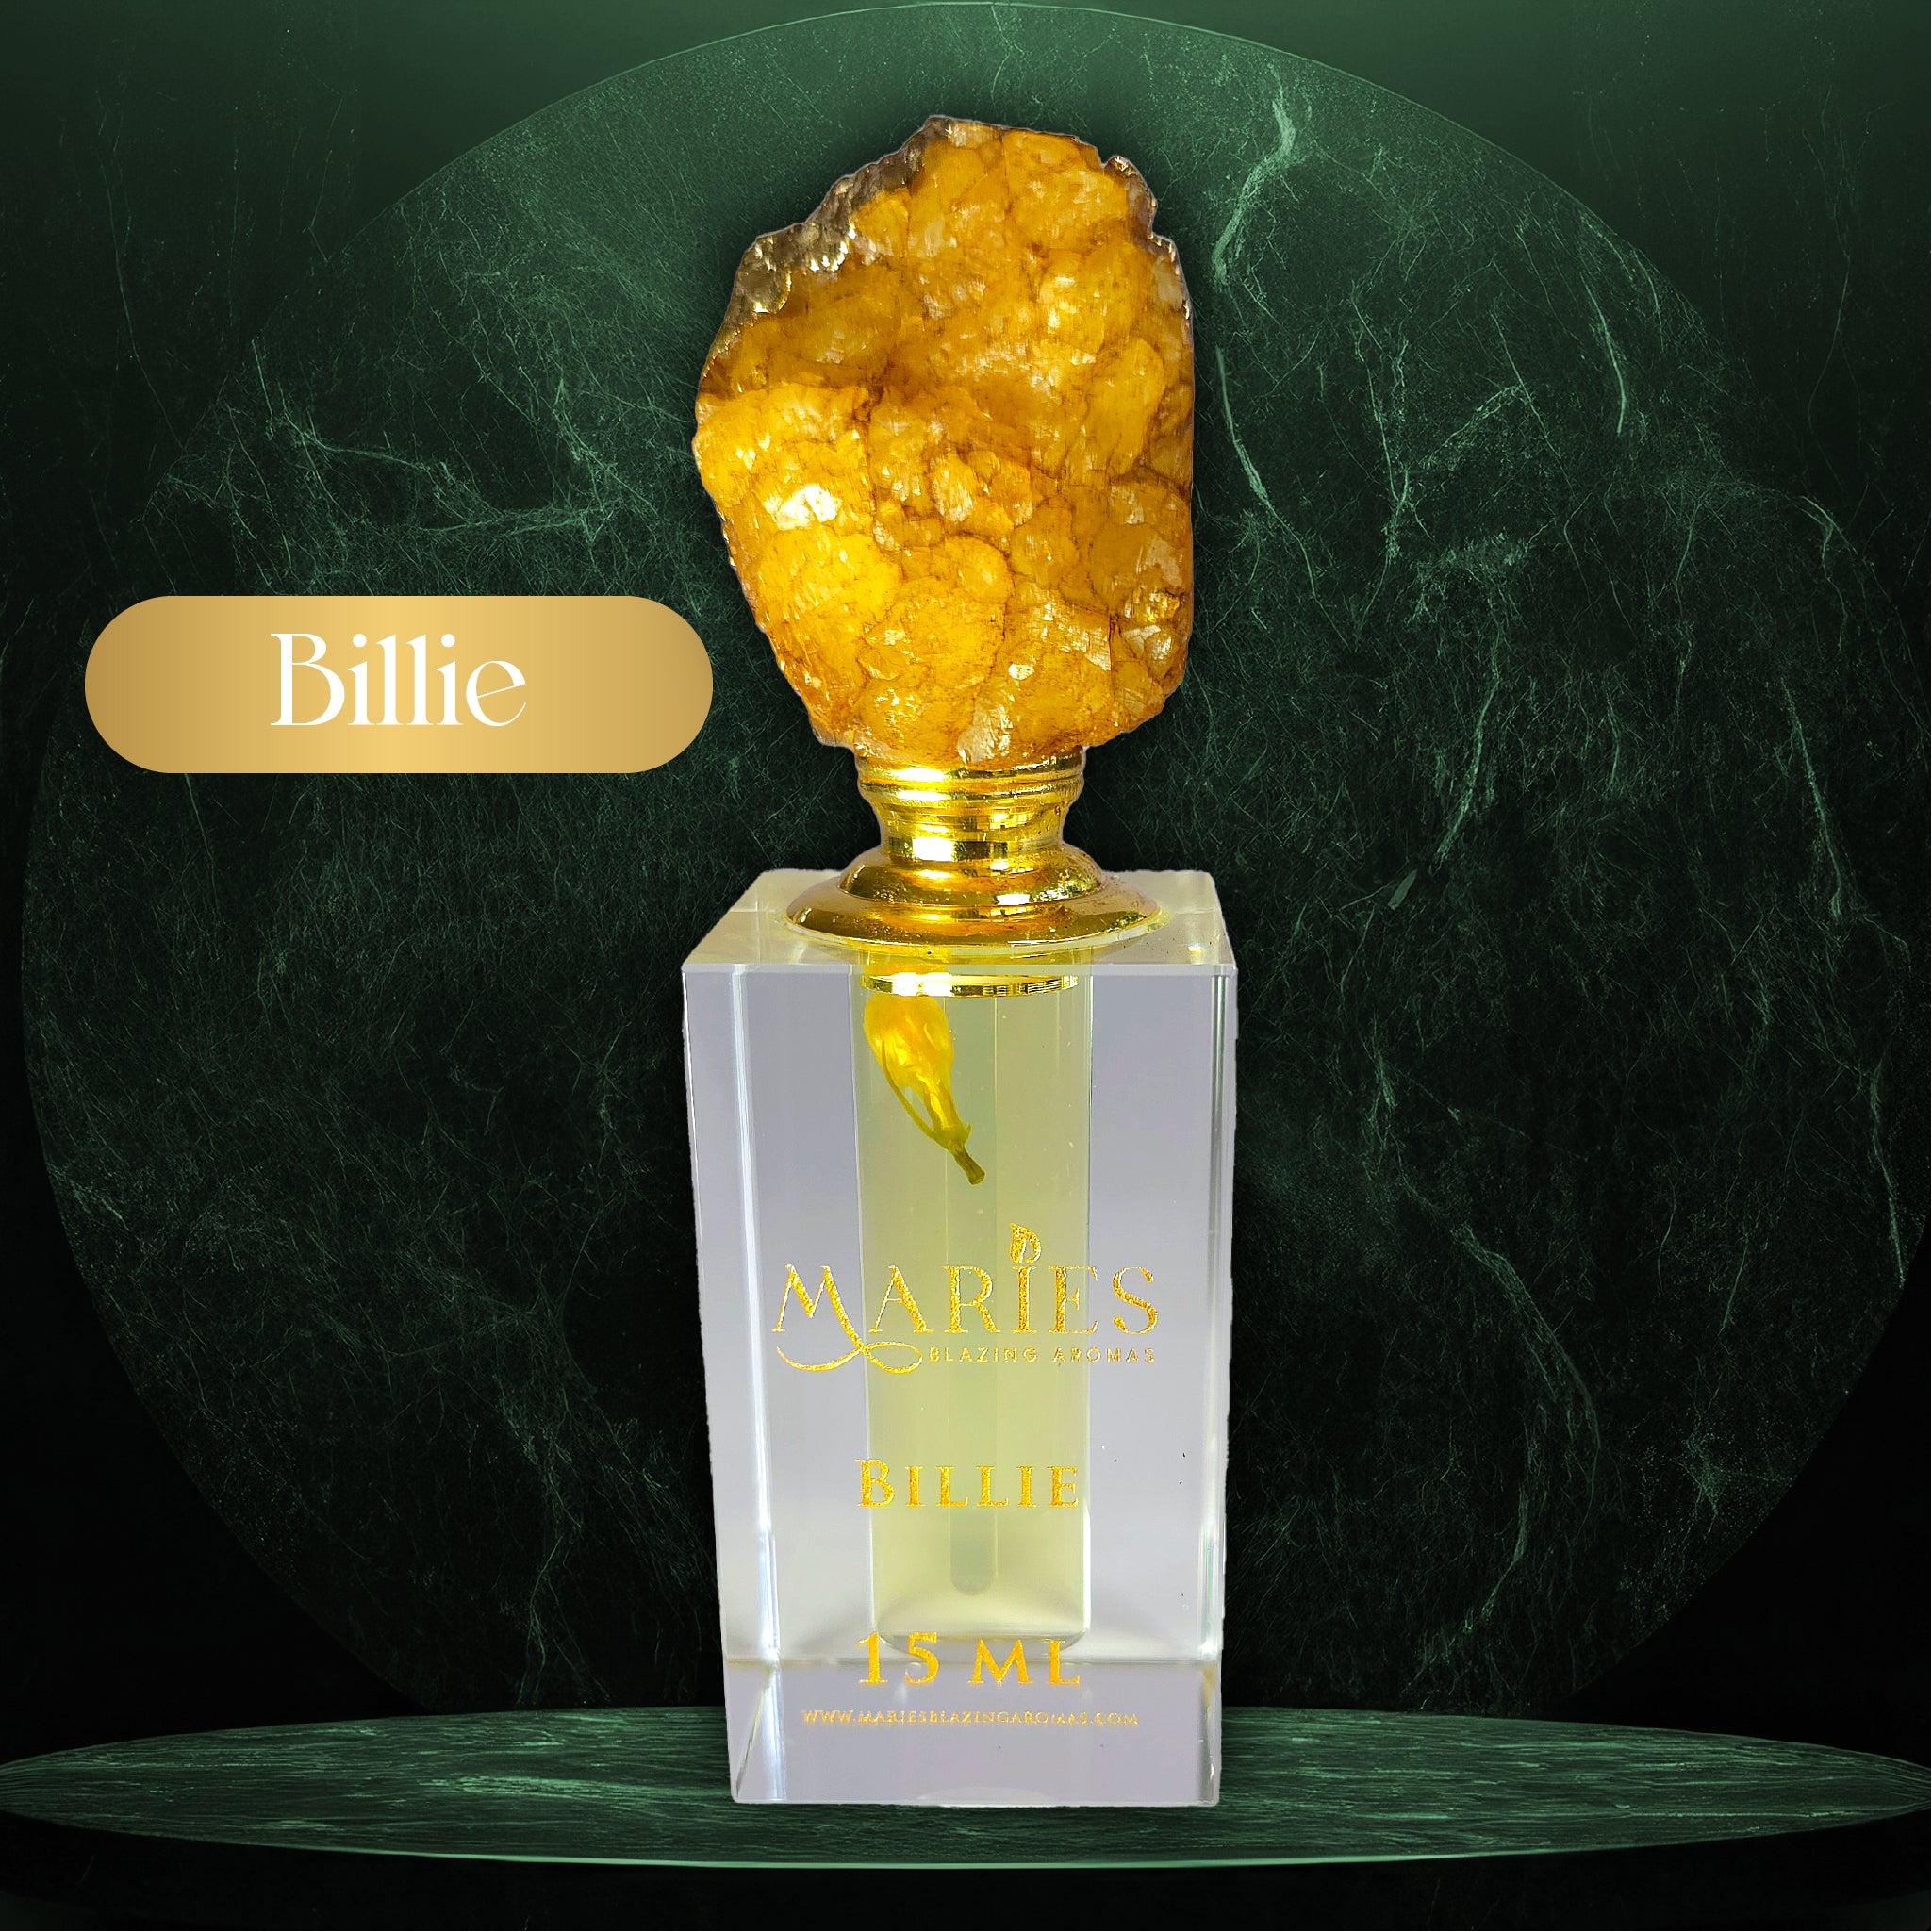 Billie Luxury Perfume Fragrance Oil | Maries Blazing Aromas - Exquisite scent captured in a bottle